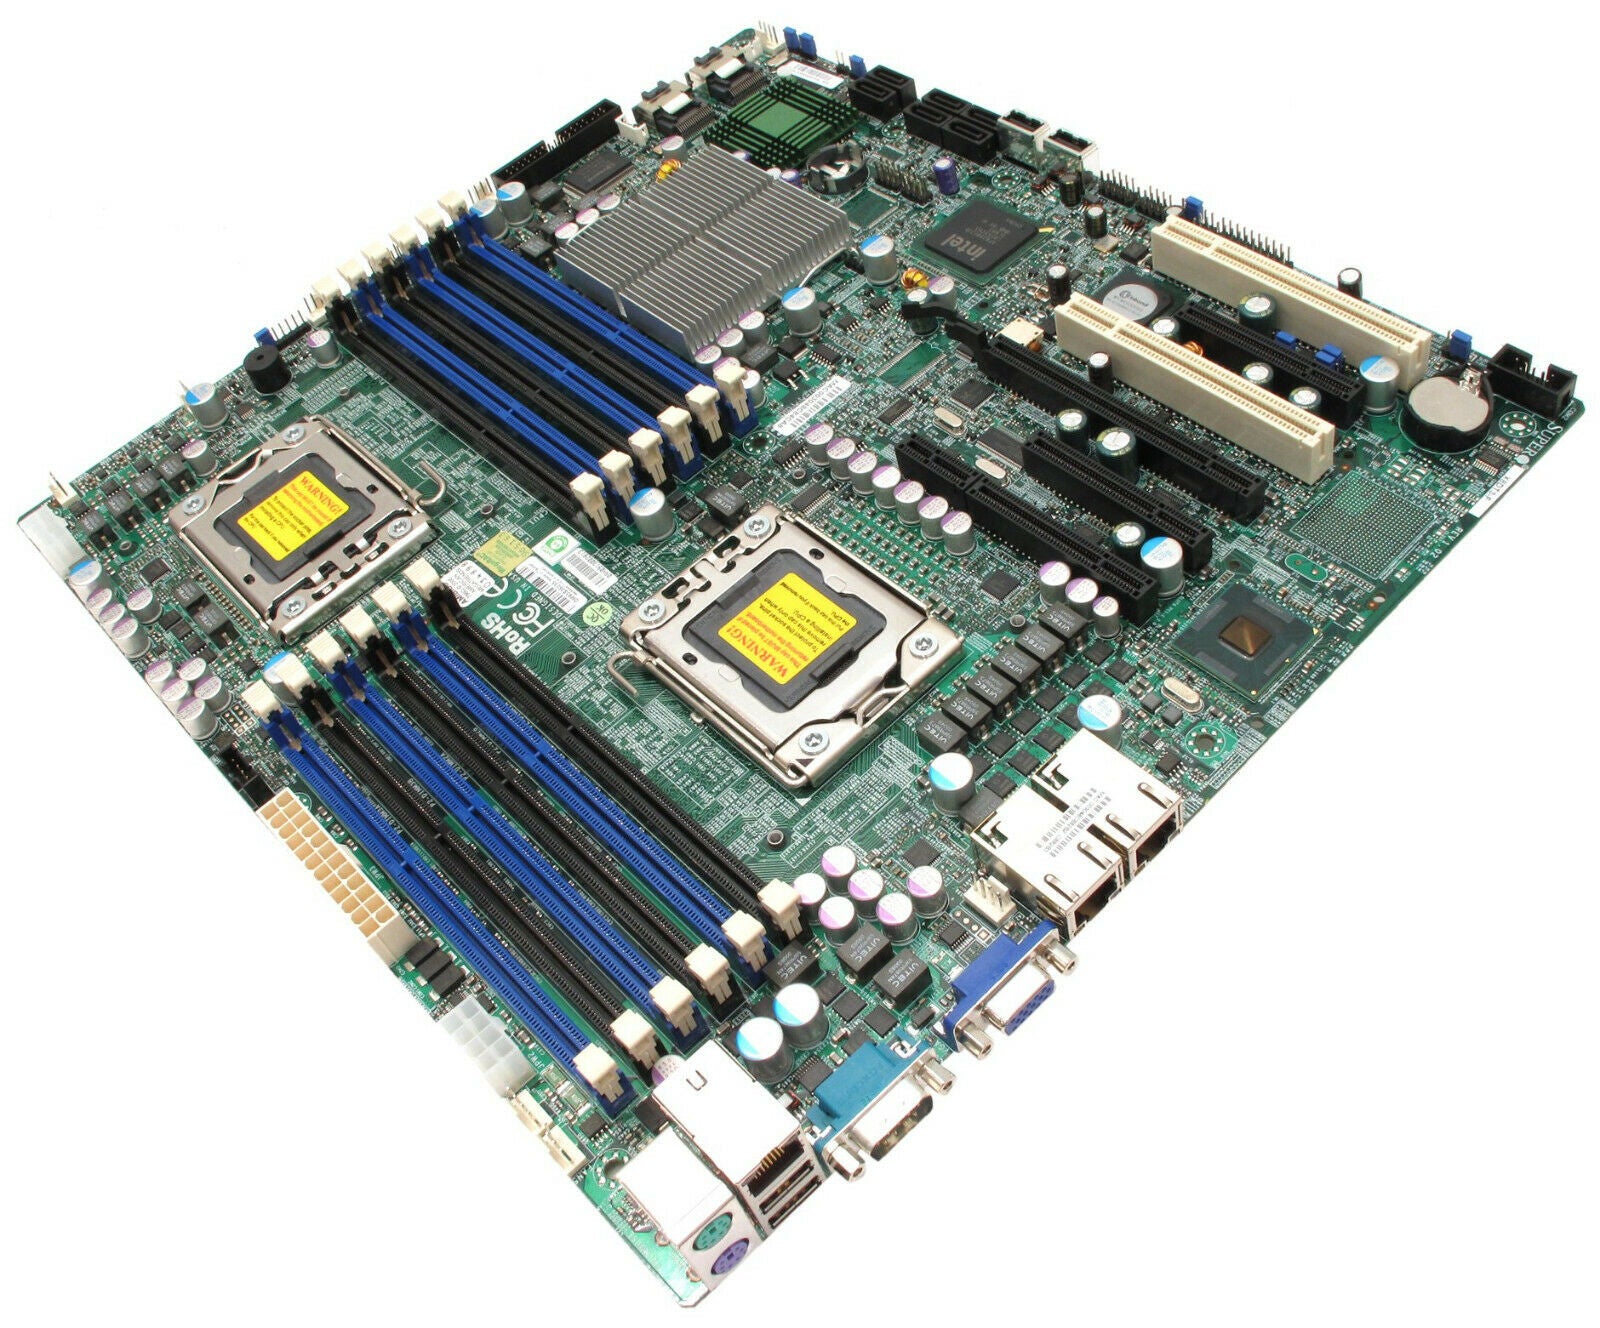 Supermicro X8DT3-F Intel 5520 Chipset Dual Socket LGA 1366 Server Motherboard